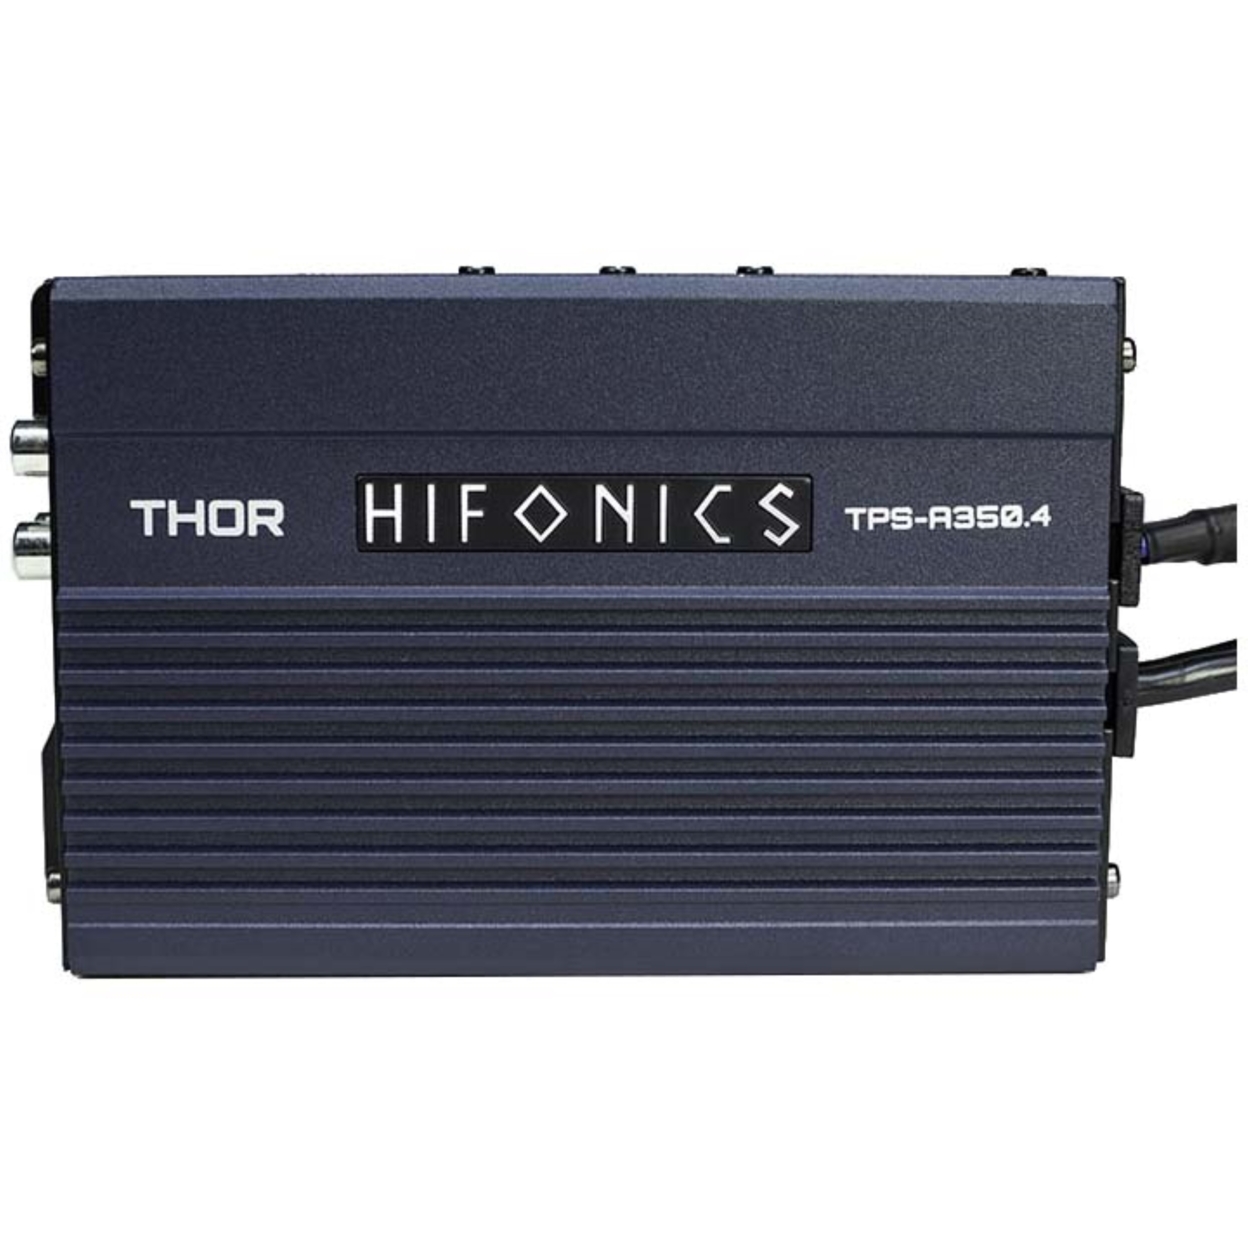 Hifonics TPS-A350.4 THOR Series 350W Class-D 4-Channel Powersports Amplifier